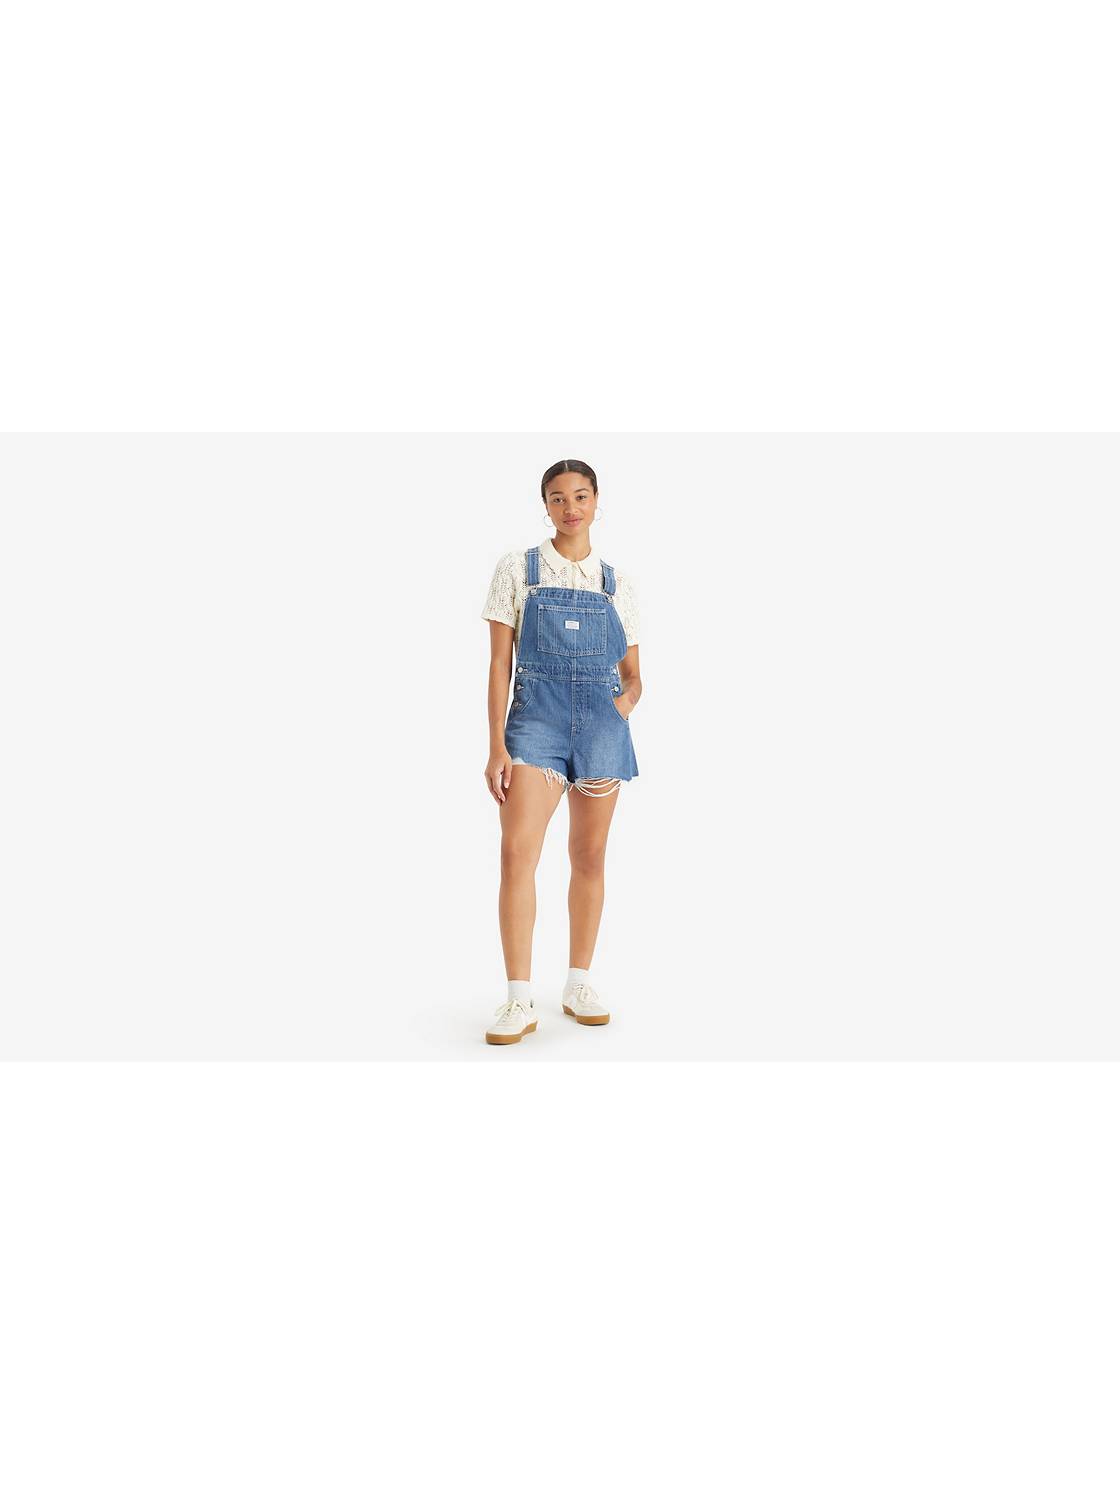 Women's Overalls & Jumpsuits: Shop Denim Styles